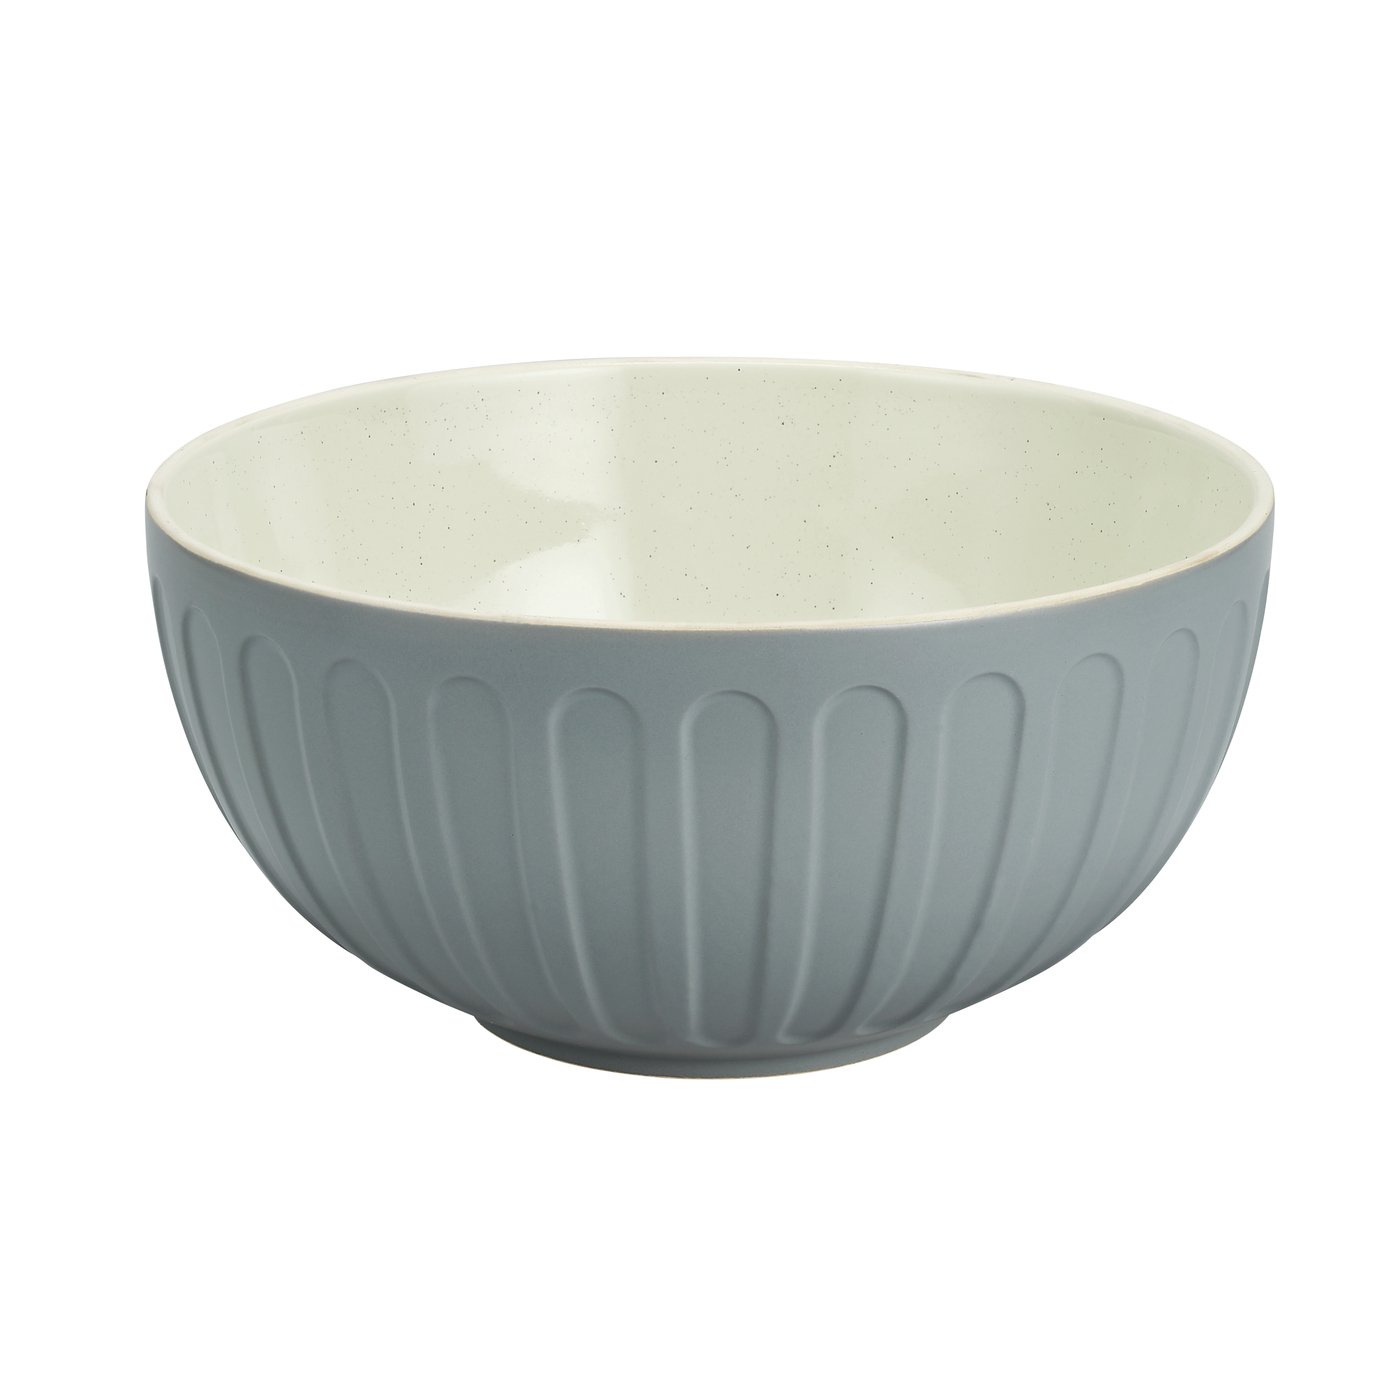 Sainsbury's Home Large Ceramic Mixing Bowl - Grey